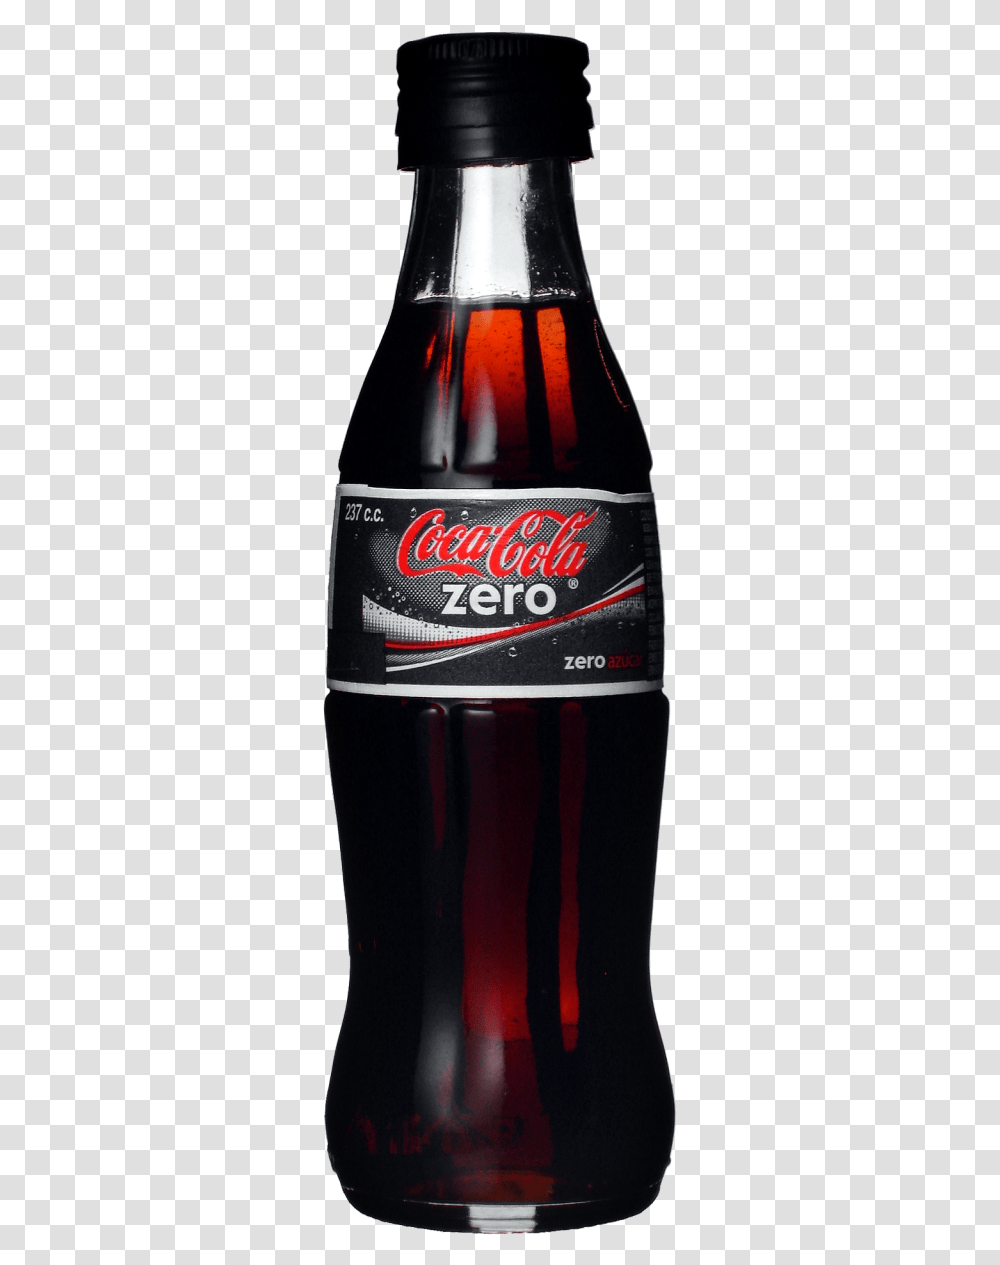 Coca Cola Bottle Image Coca Cola Zero Bottle, Coke, Beverage, Drink, Beer Transparent Png